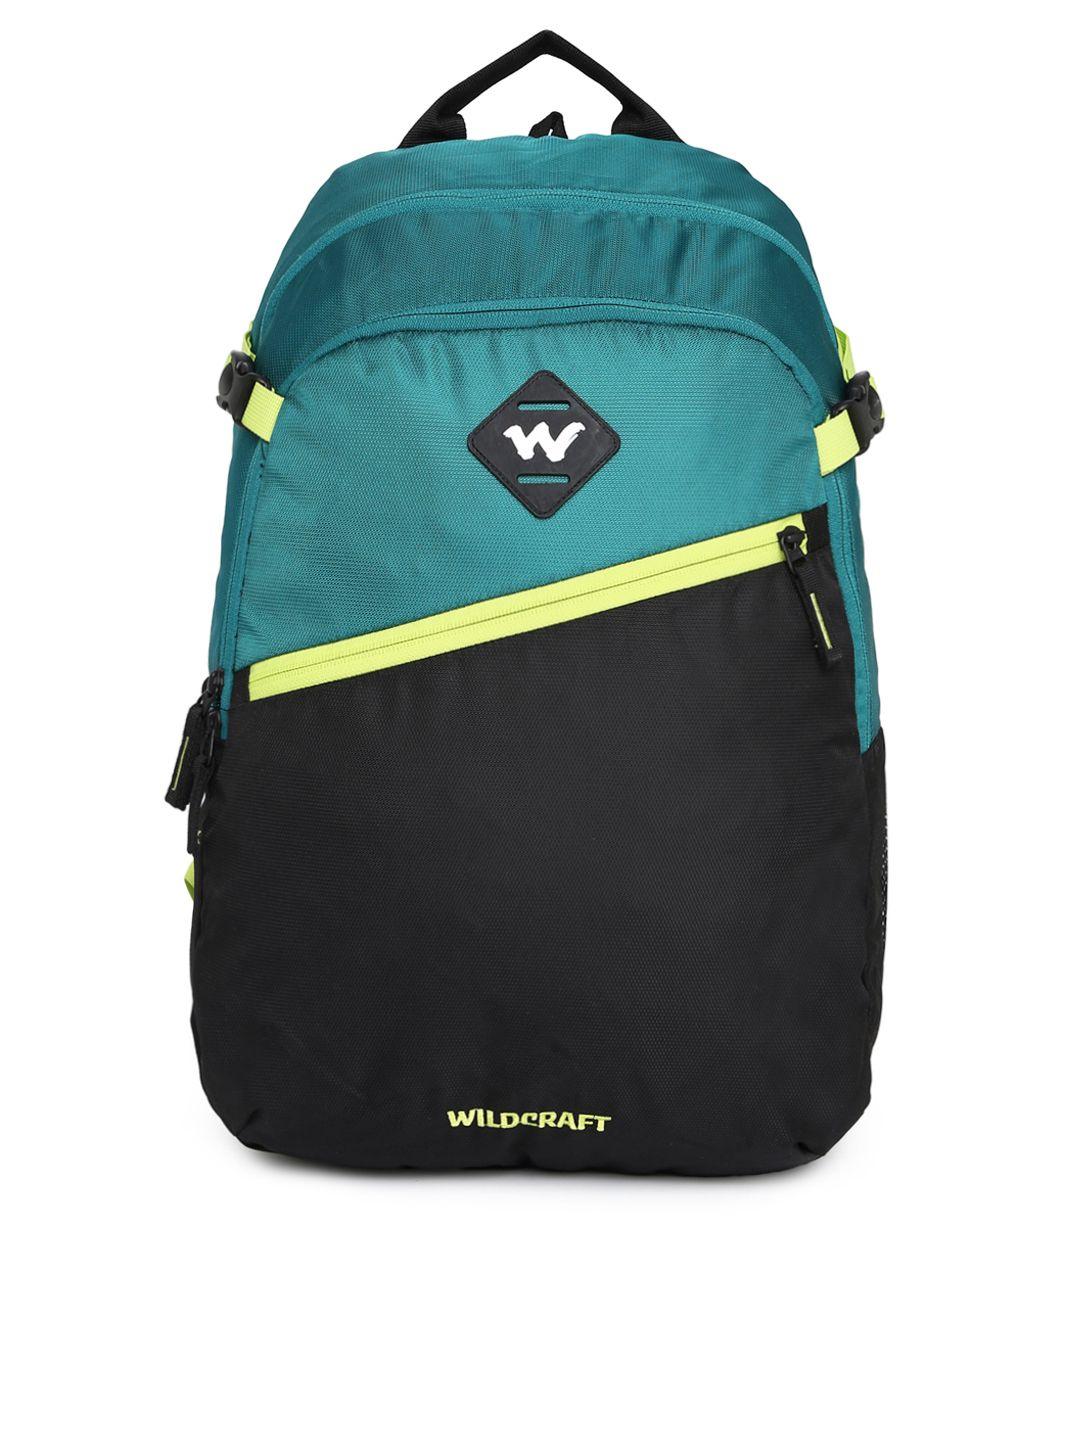 wildcraft-unisex-teal-green-&-black-colourblocked-faber-laptop-backpack